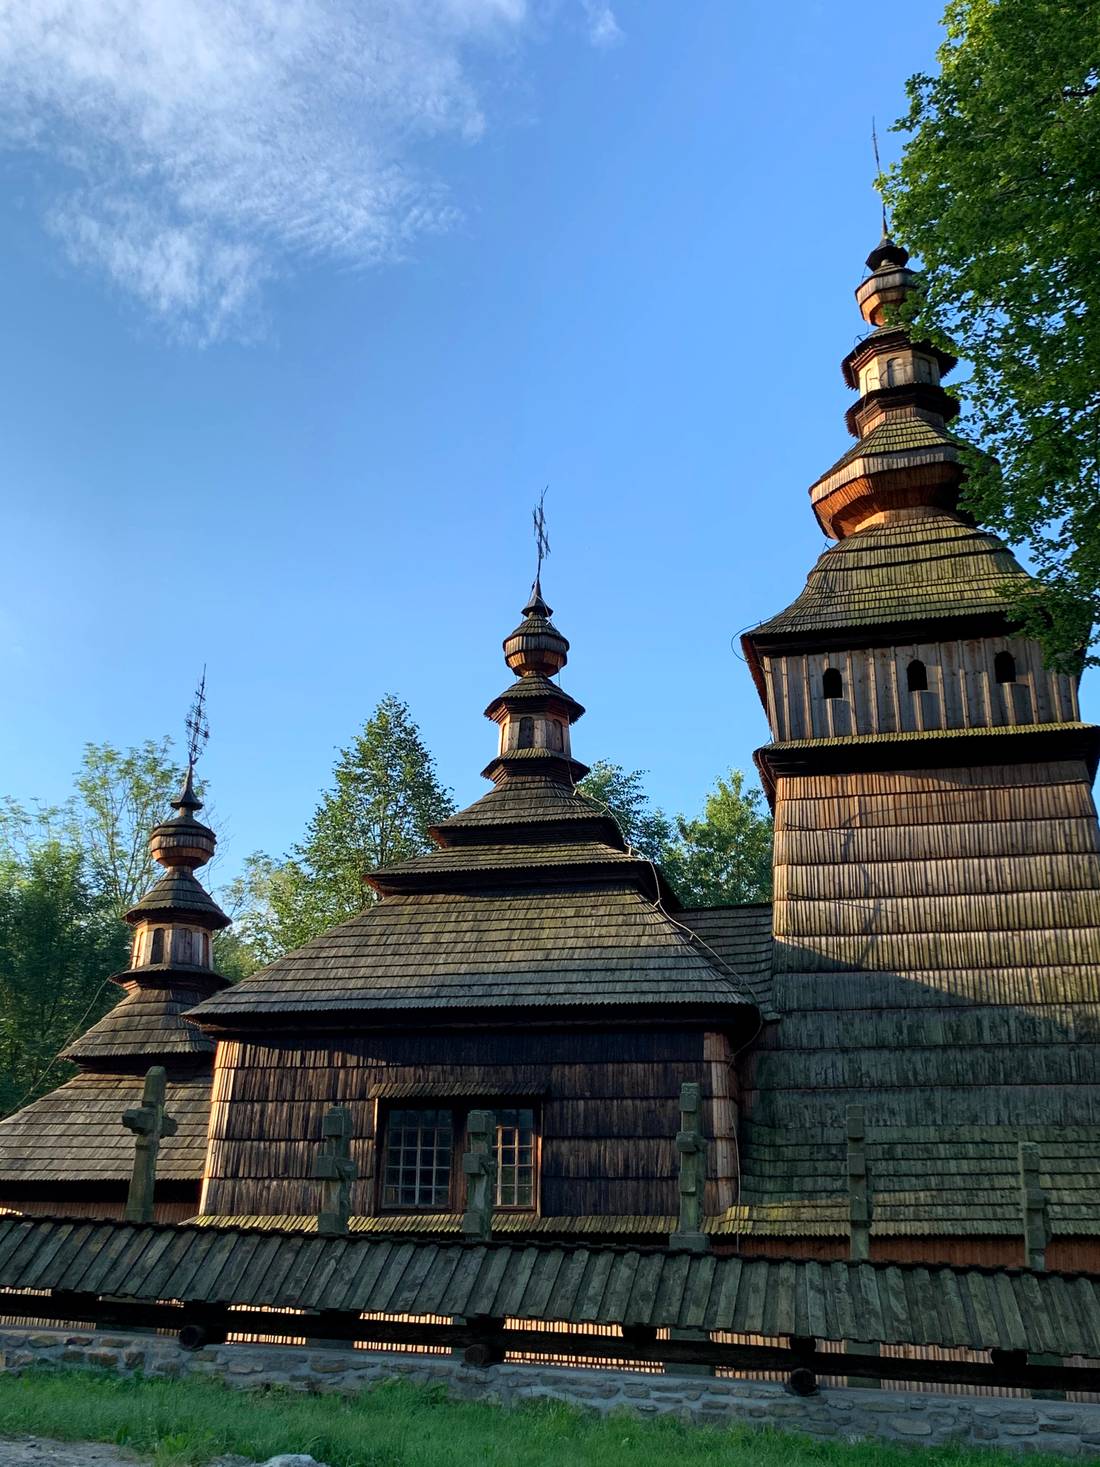 Wooden church in Kotań, Poland